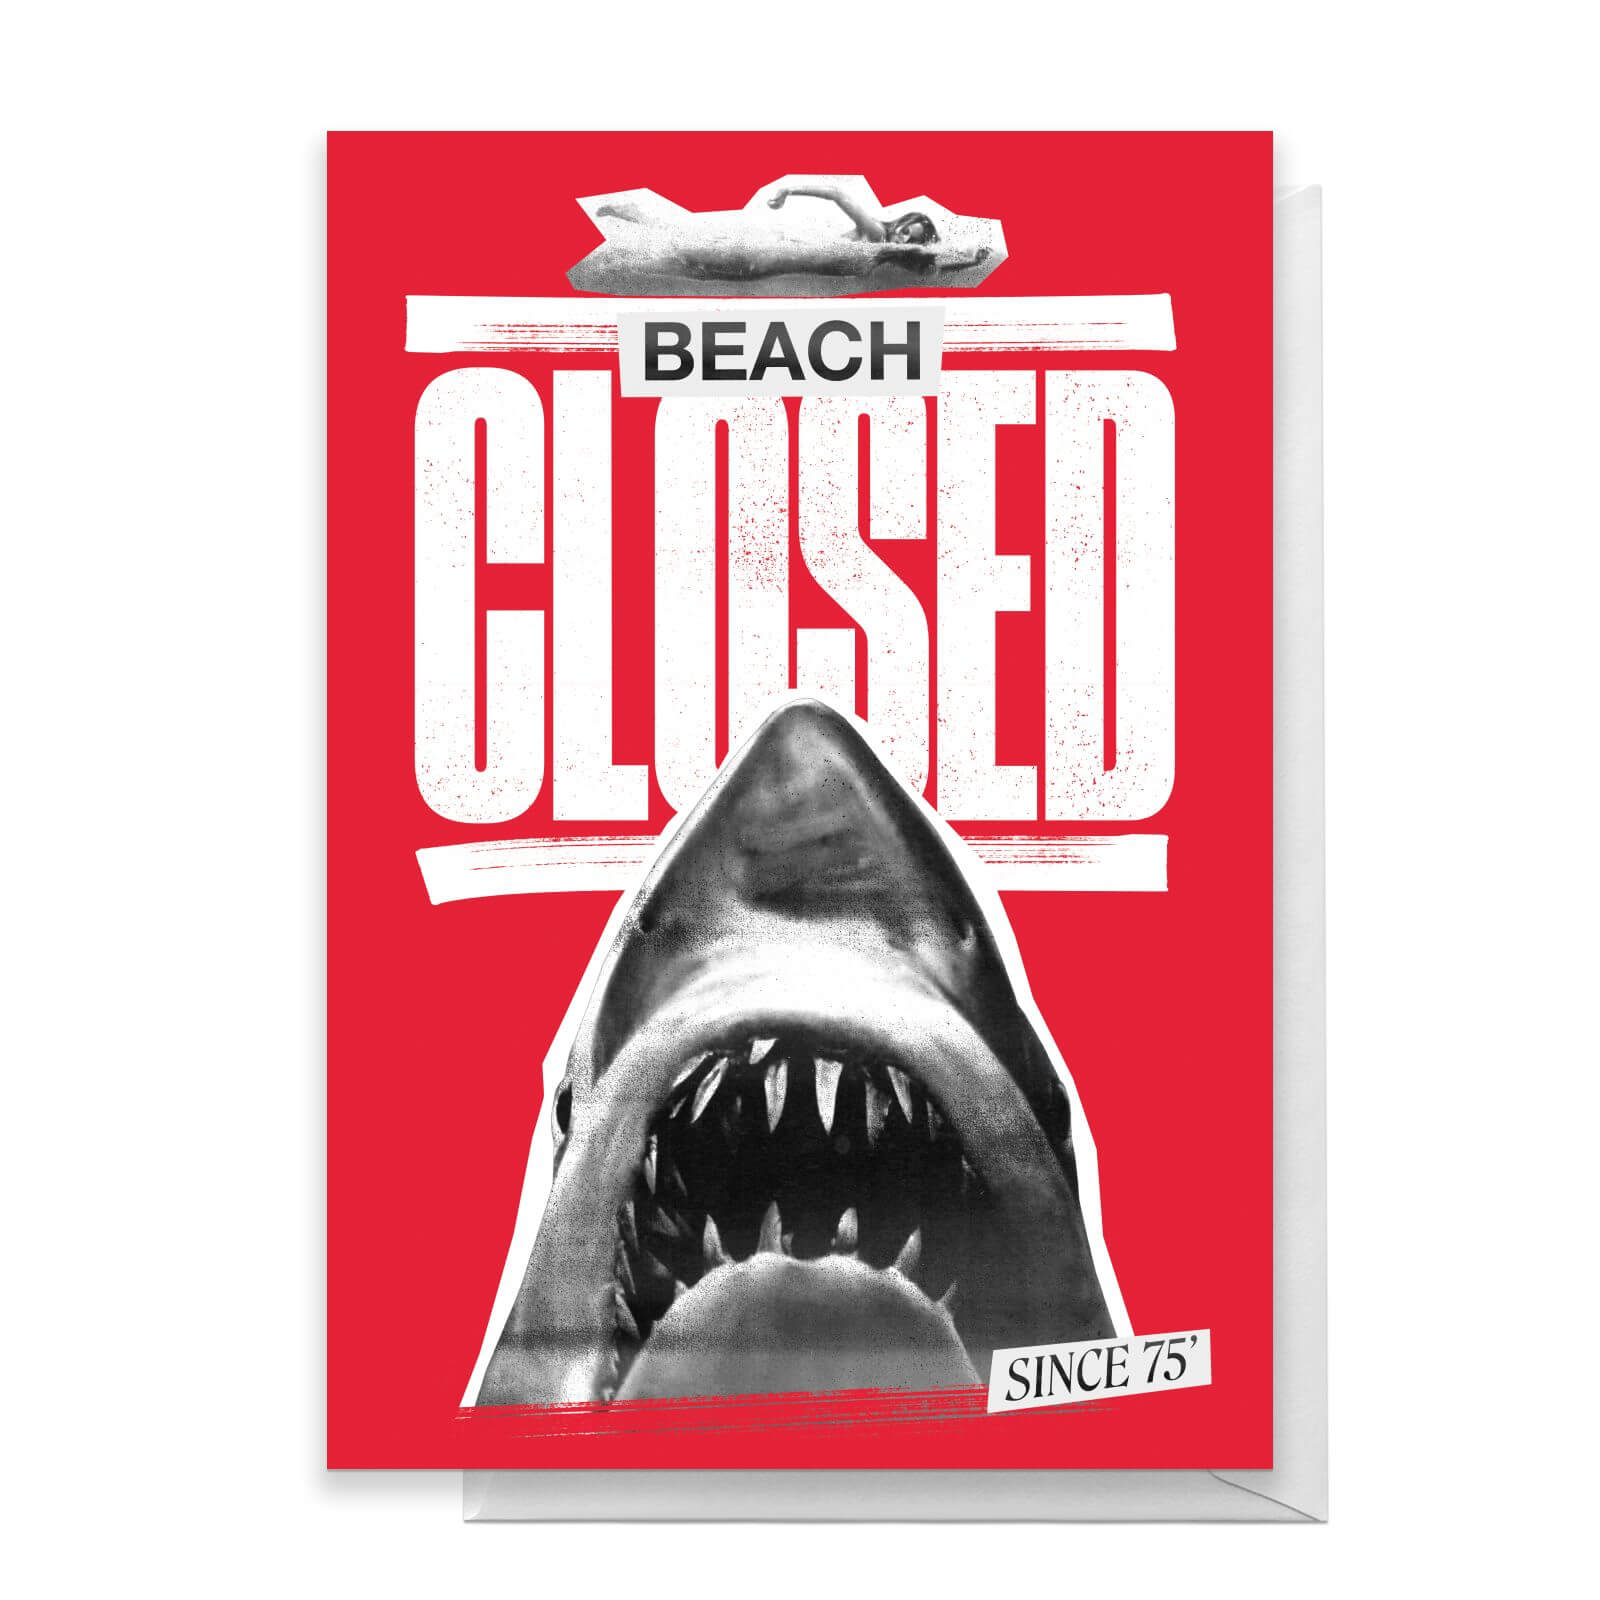 Jaws Beach Closed Greetings Card - Standard Card